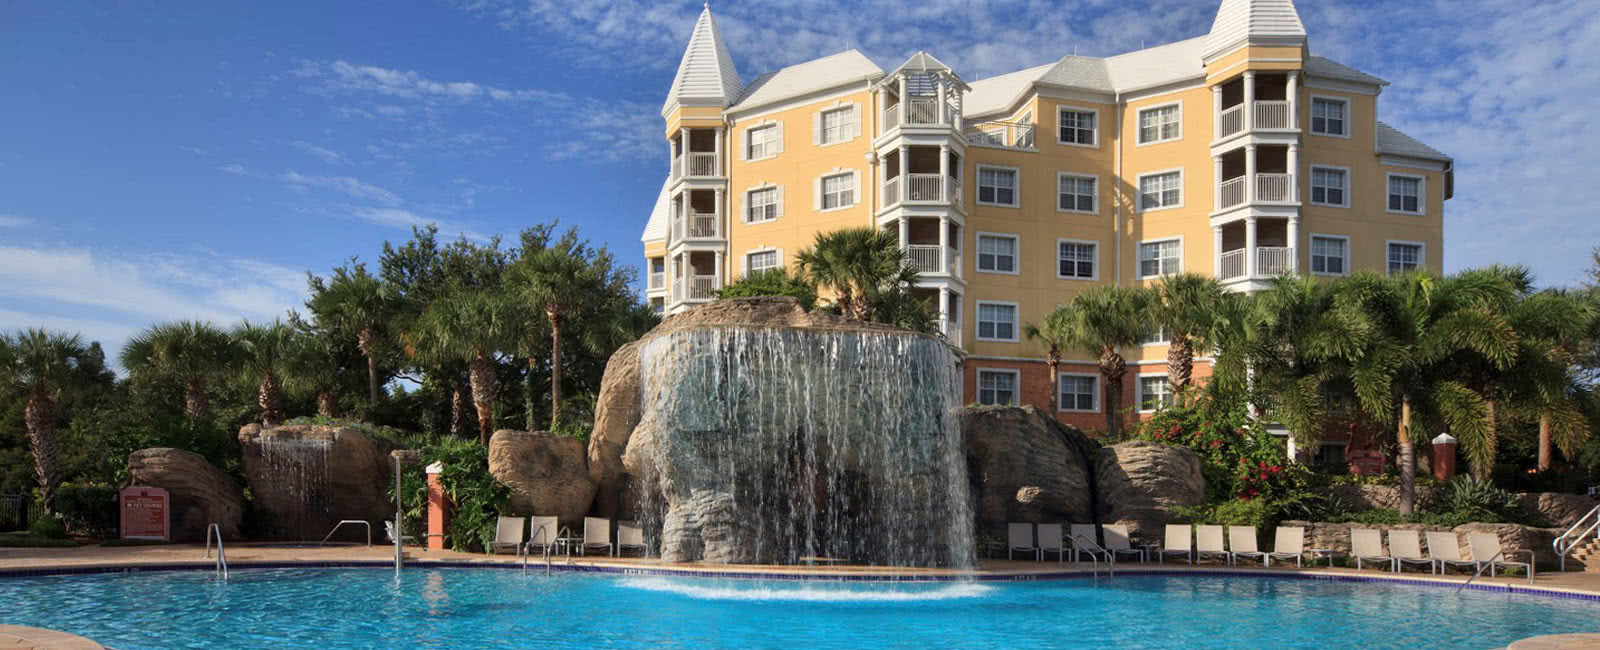 Exterior of Hilton Grand Vacations Club at SeaWorld in Orlando, Florida